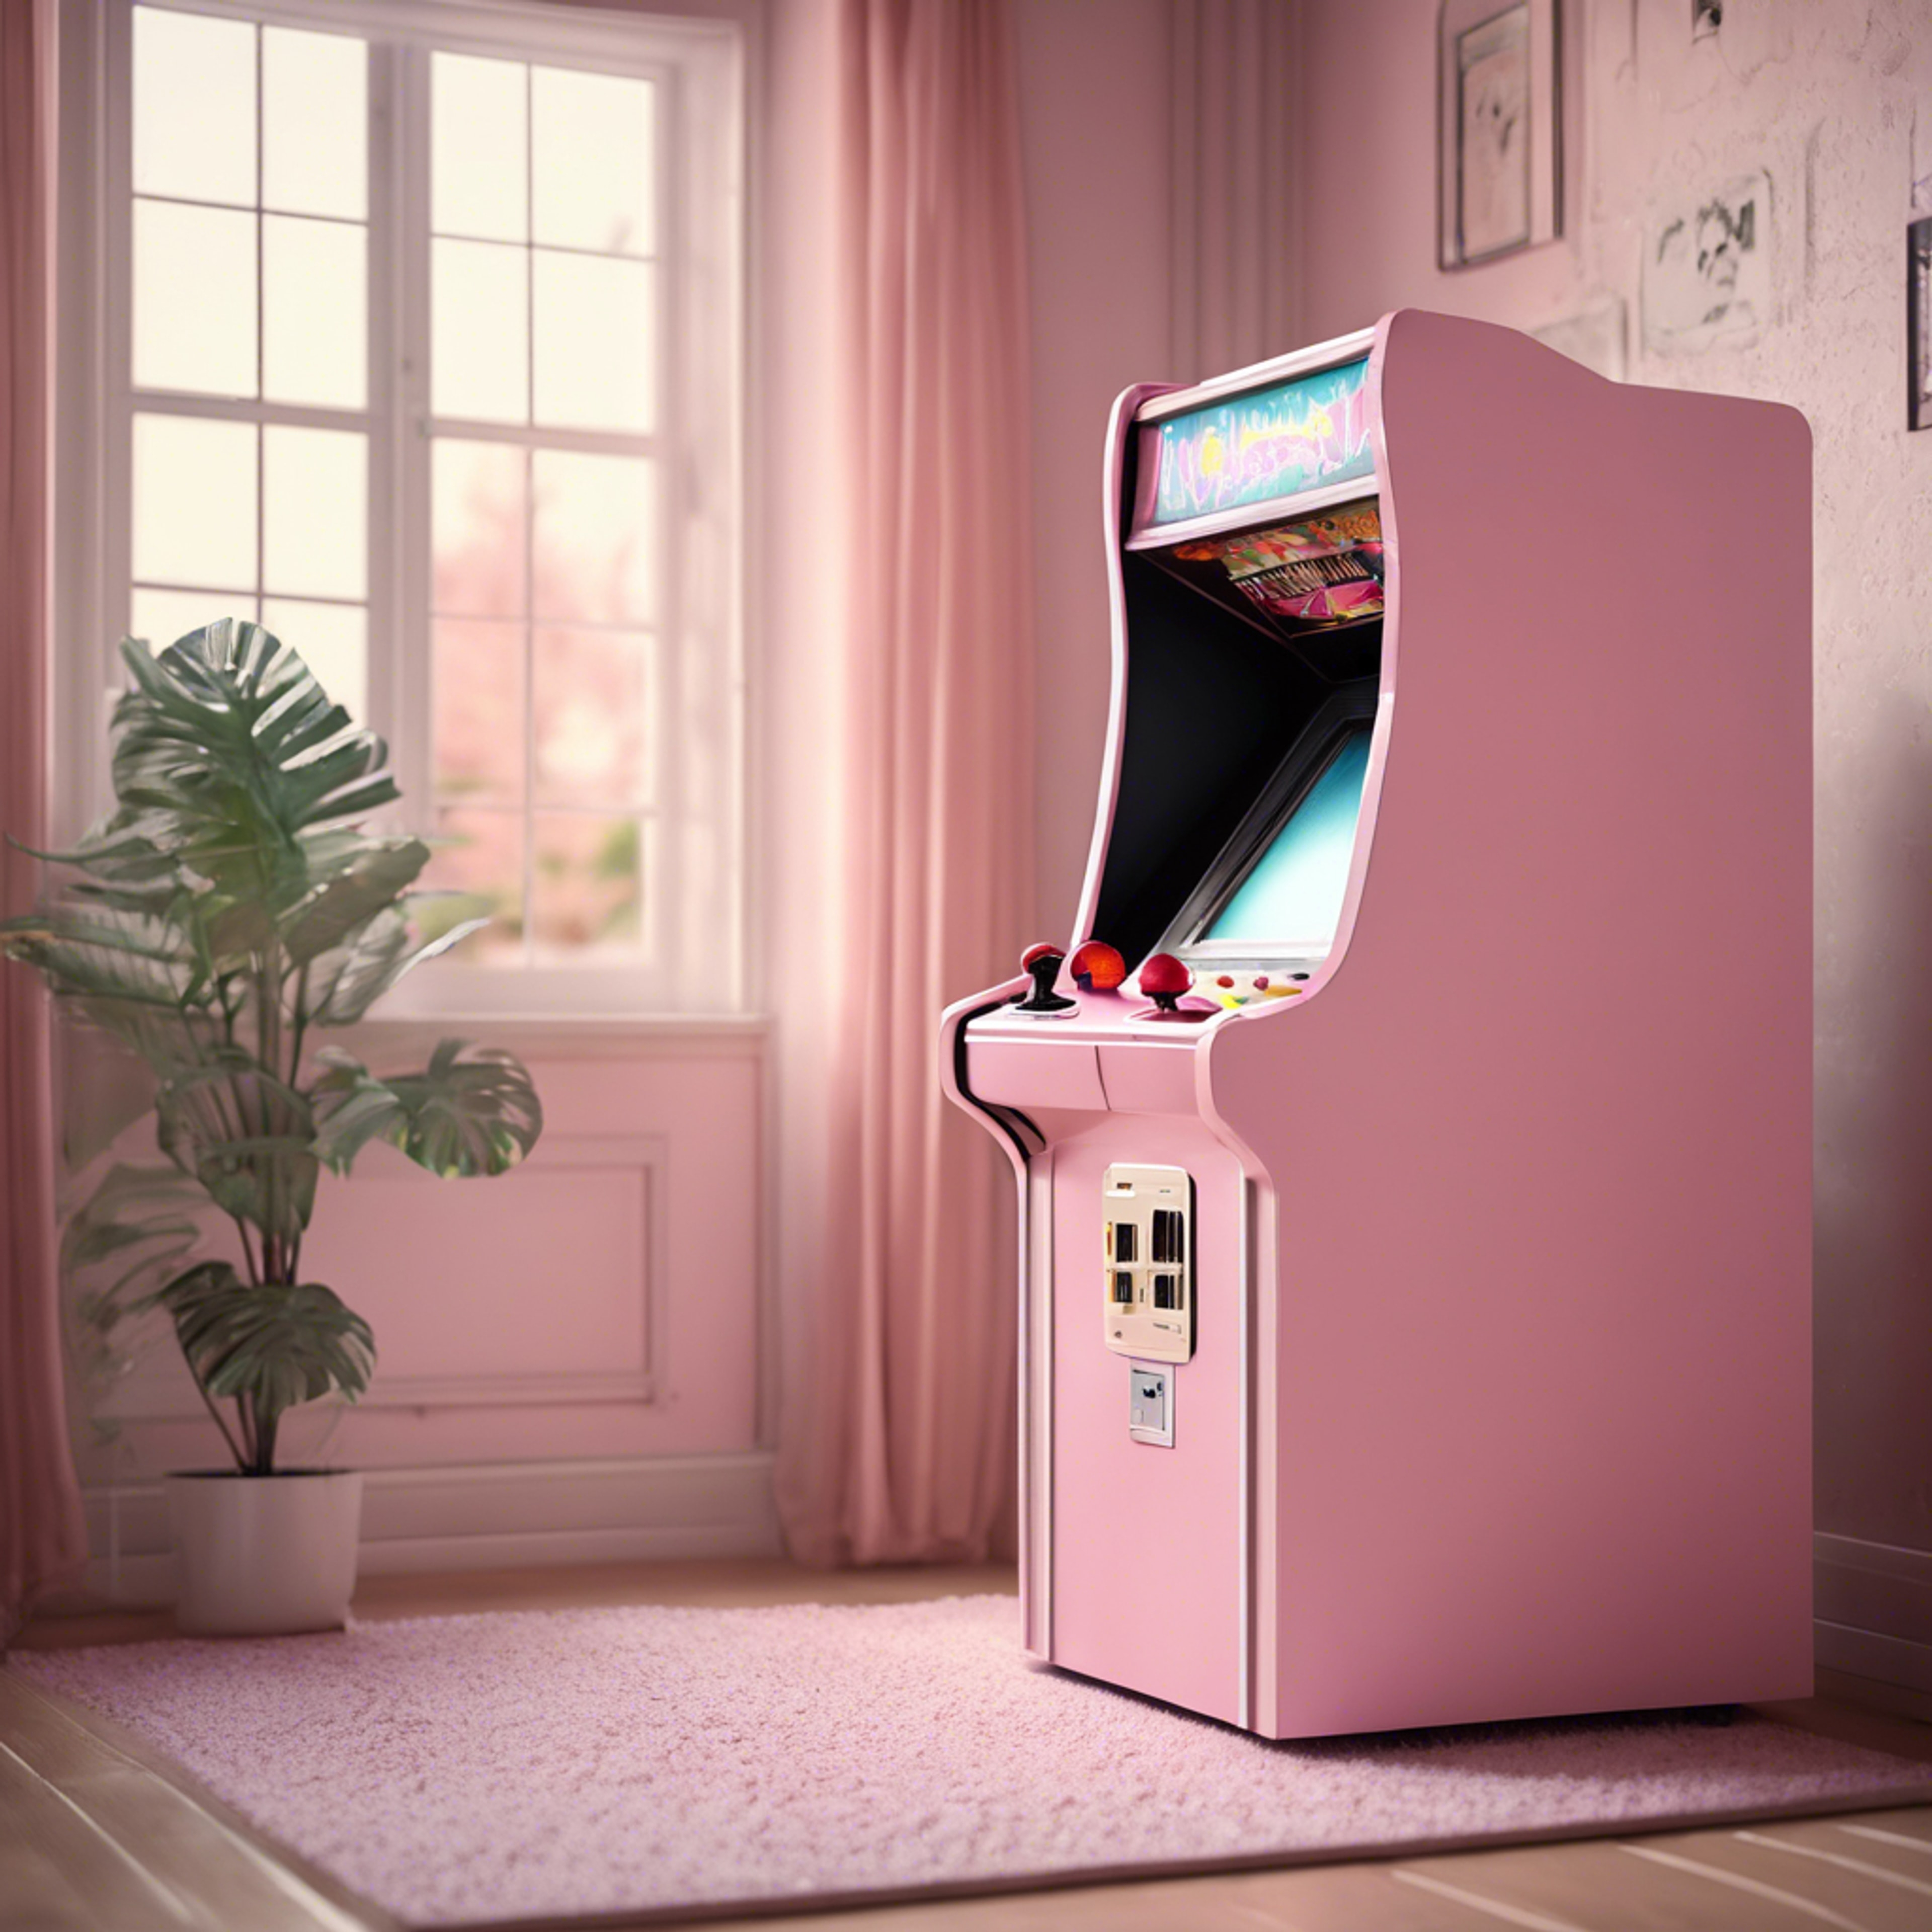 A pastel pink retro arcade machine in a cute, feminine room during sunrise. Behang[d6fdc55d66e84aad939c]